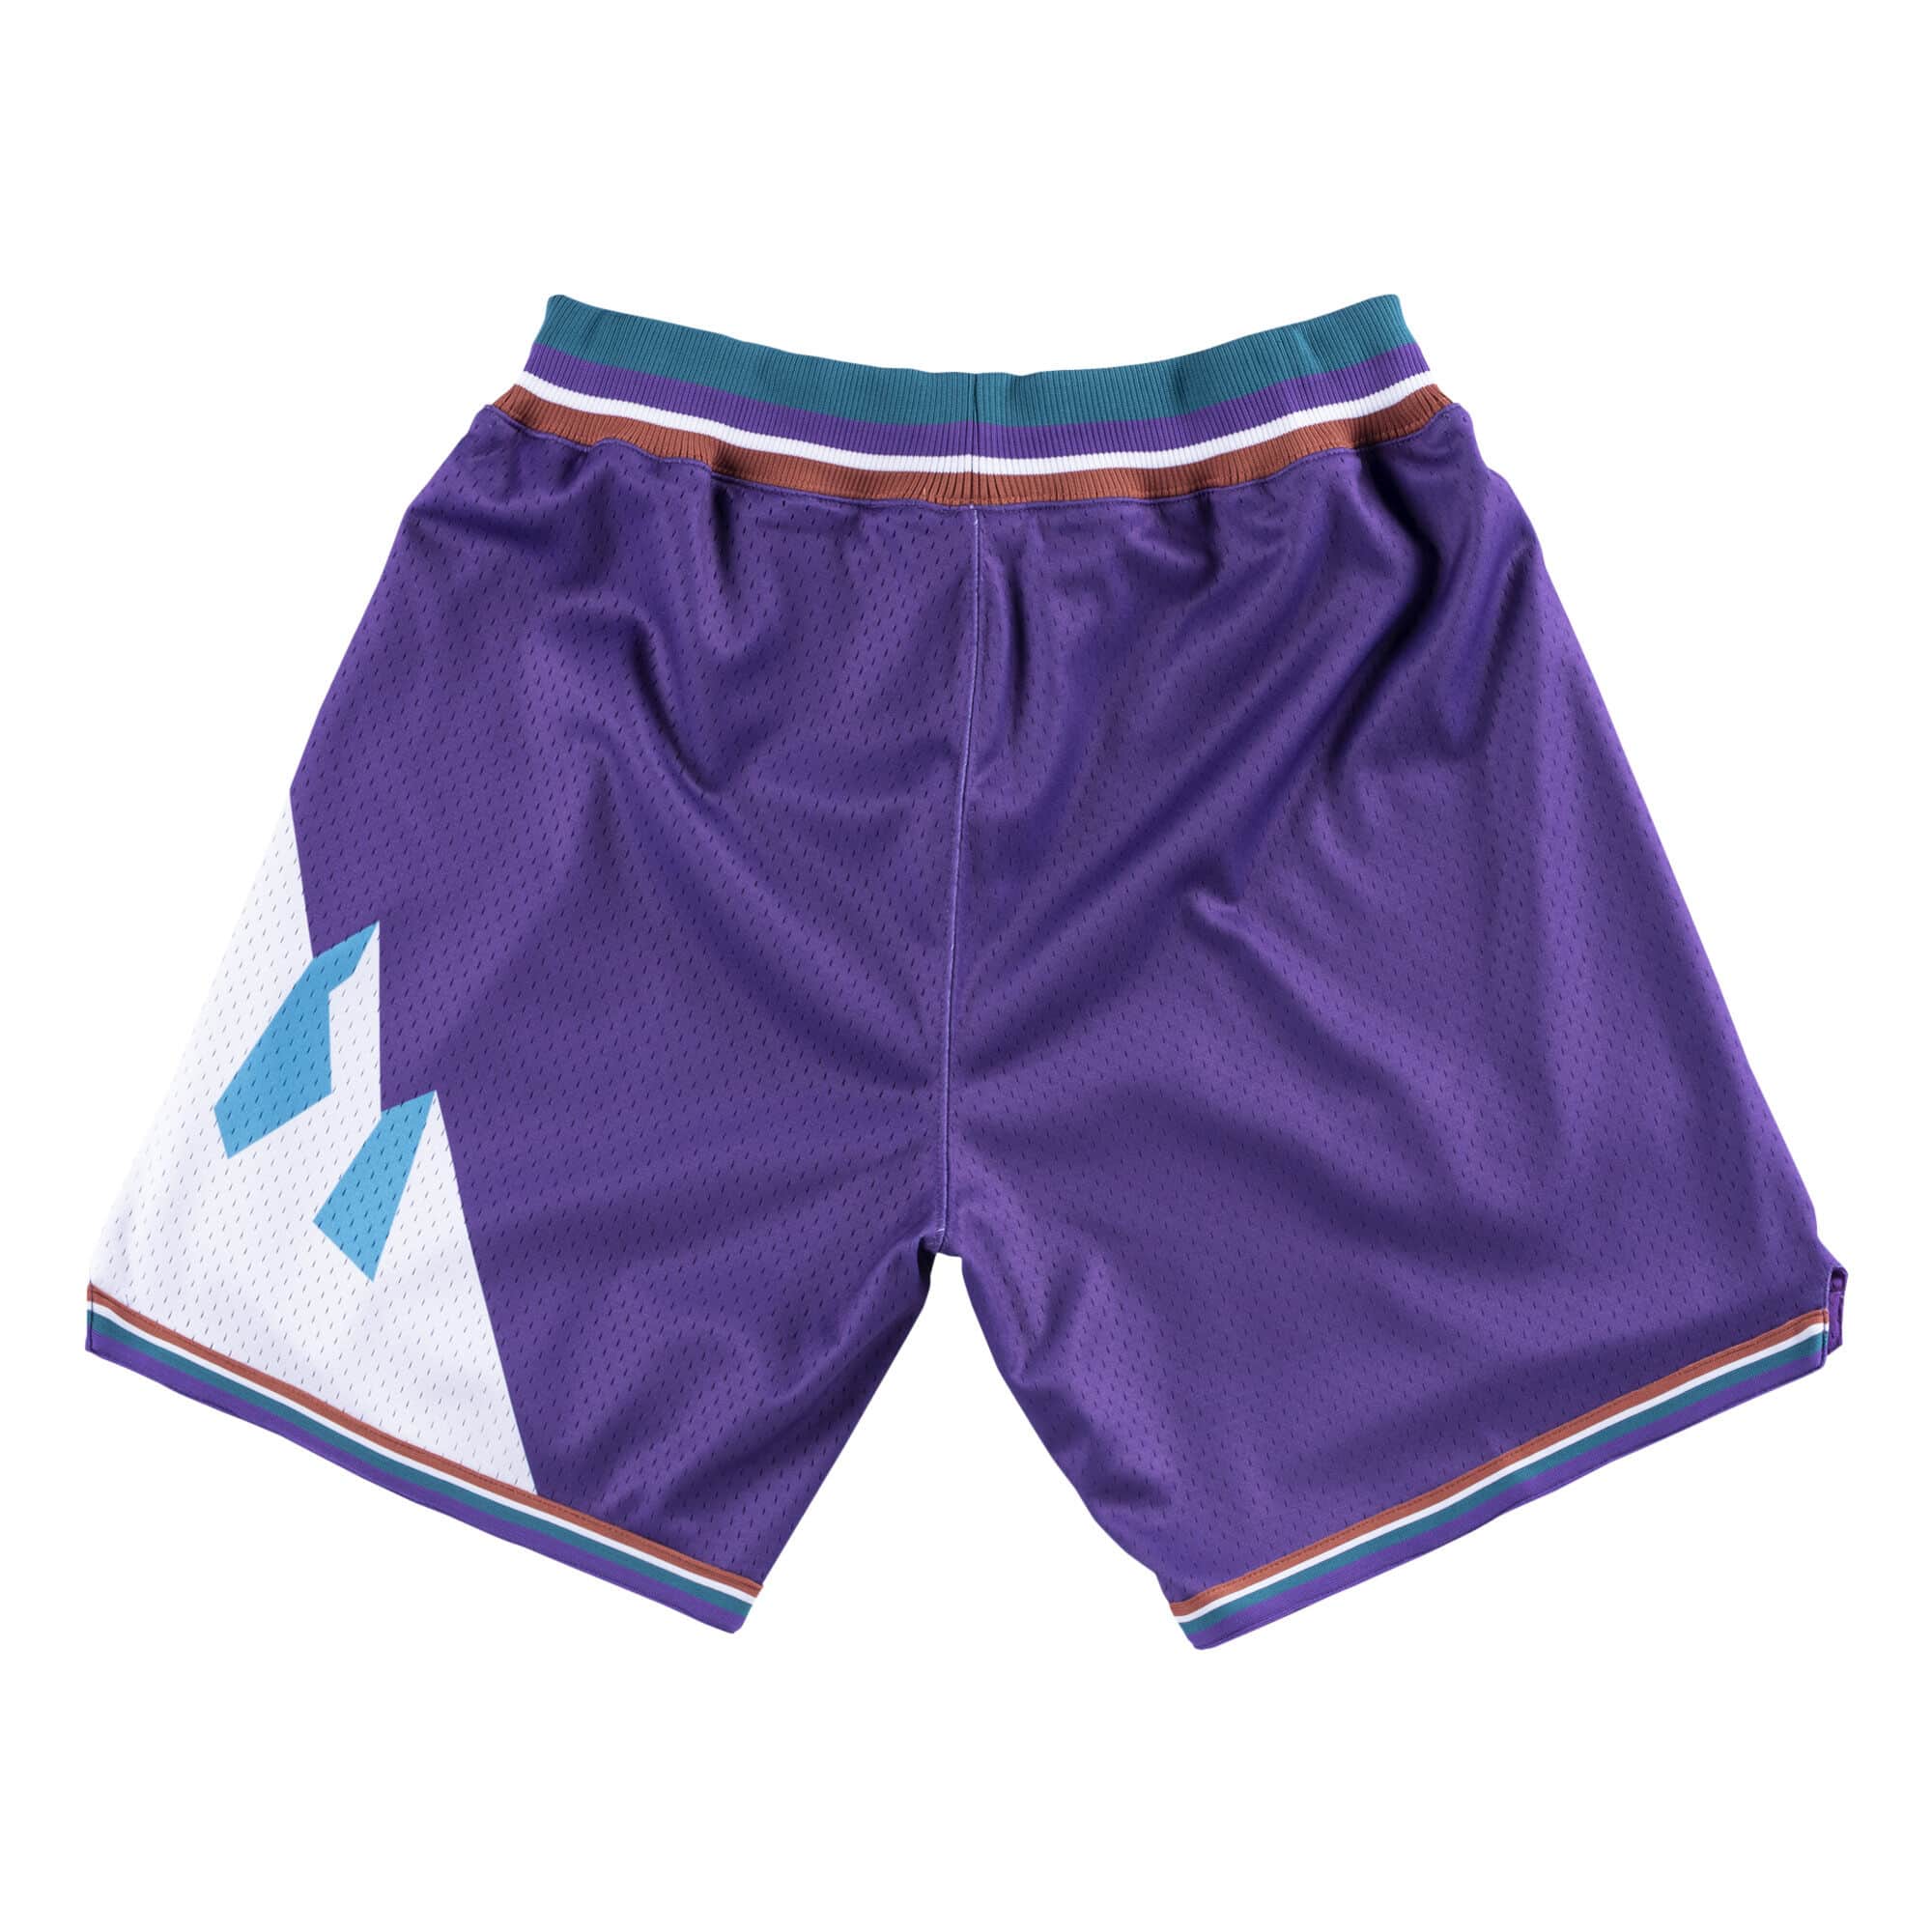 Nike Men's Utah Jazz Hardwood Classic Swingman Shorts, Medium, Purple